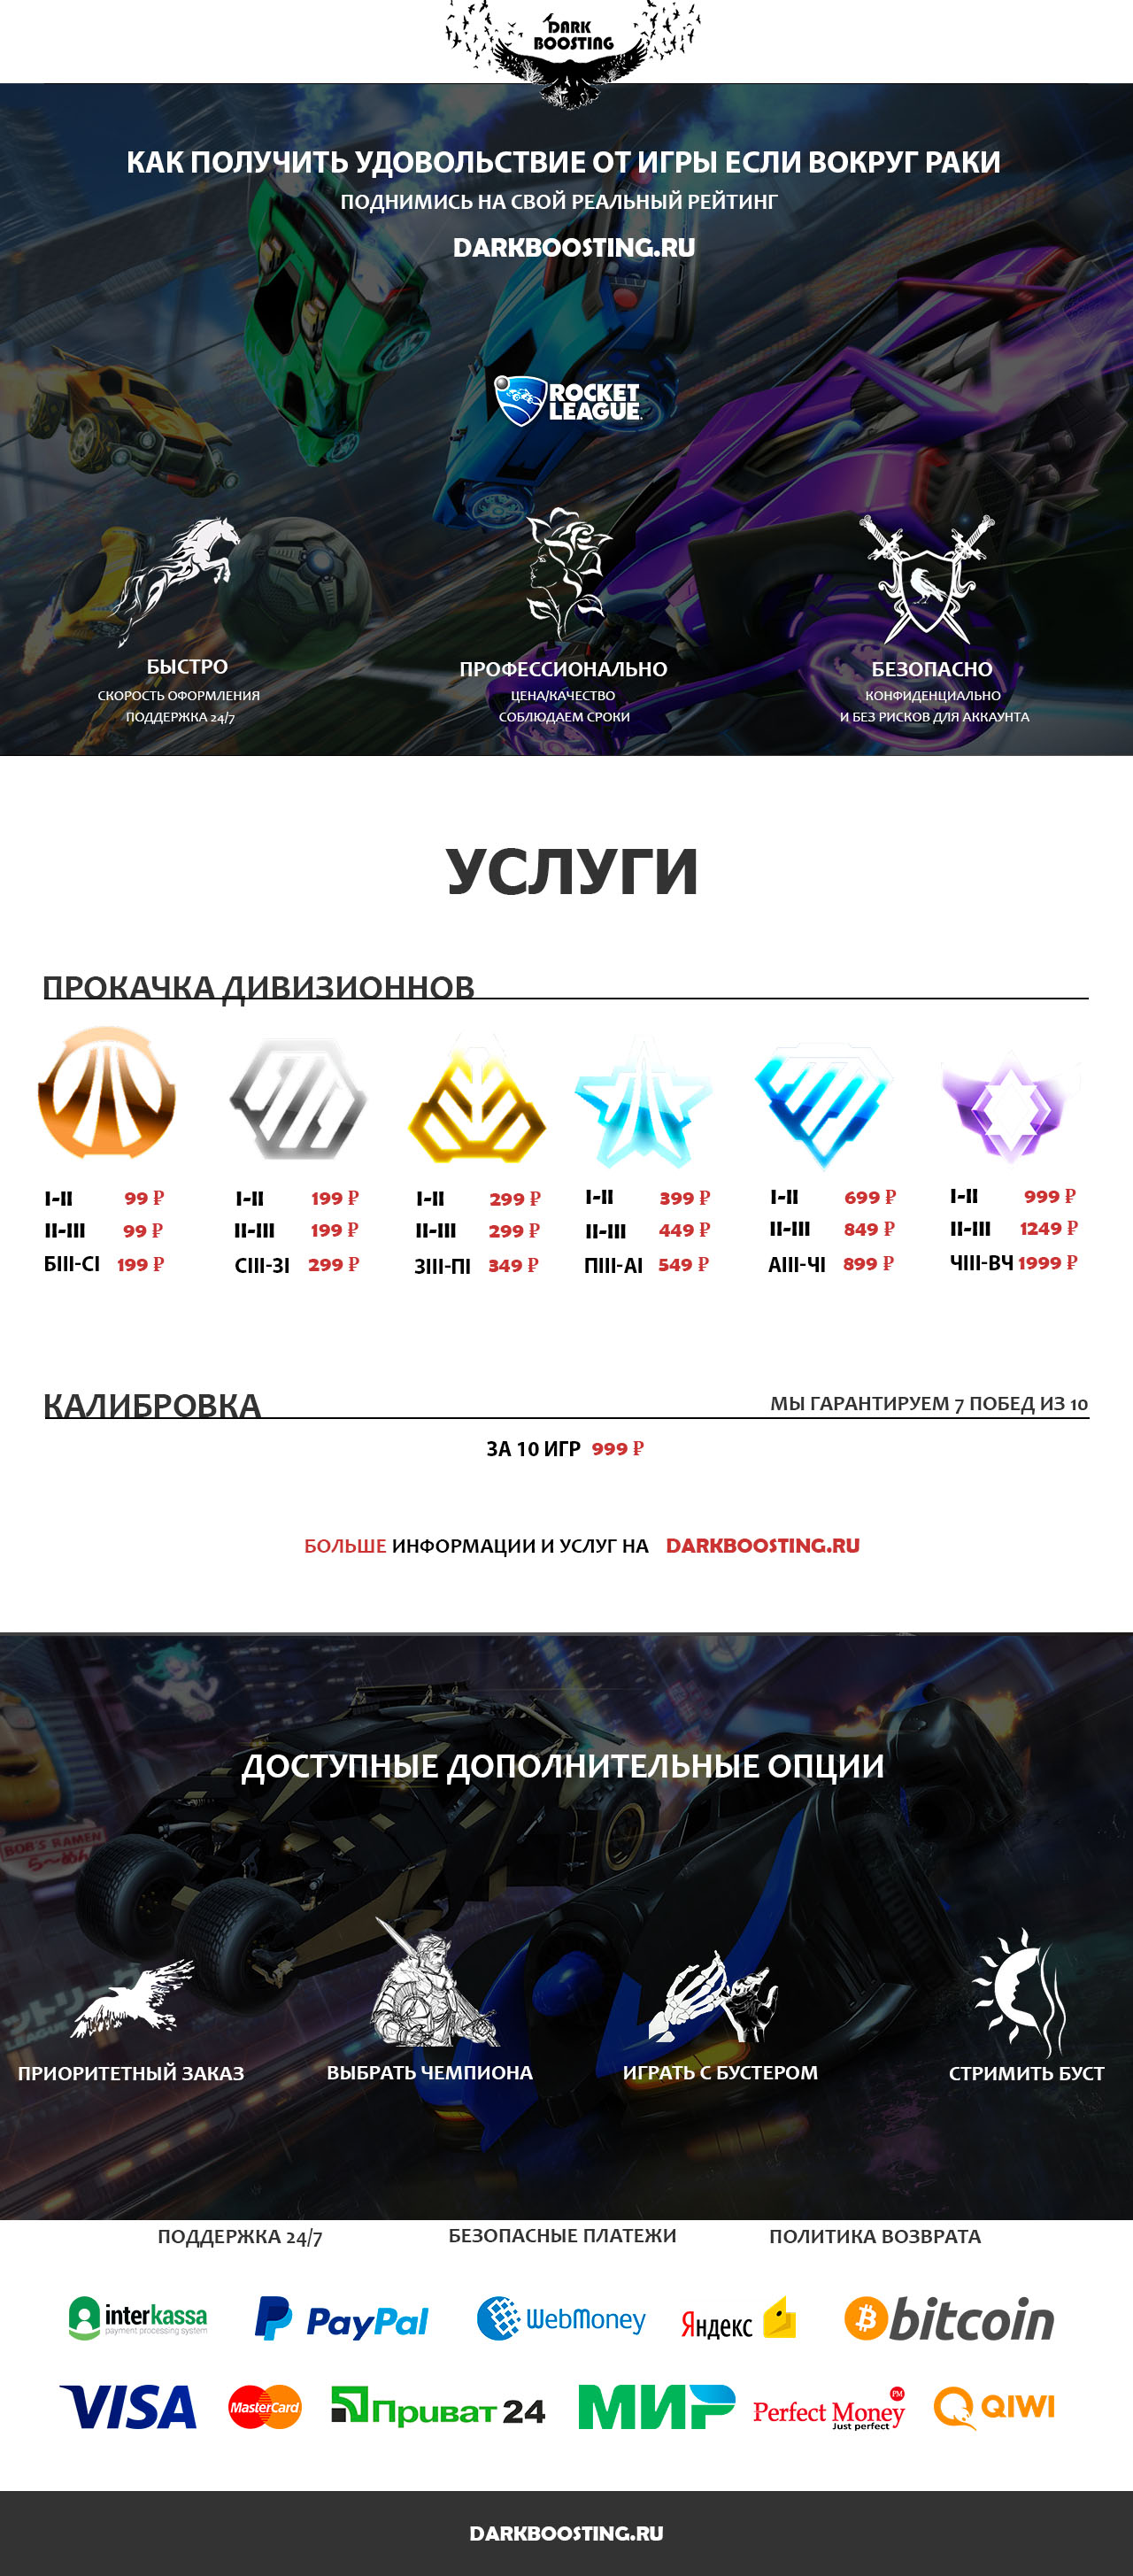 DarkBoosting - cheap russian service-ru_rocket-jpg